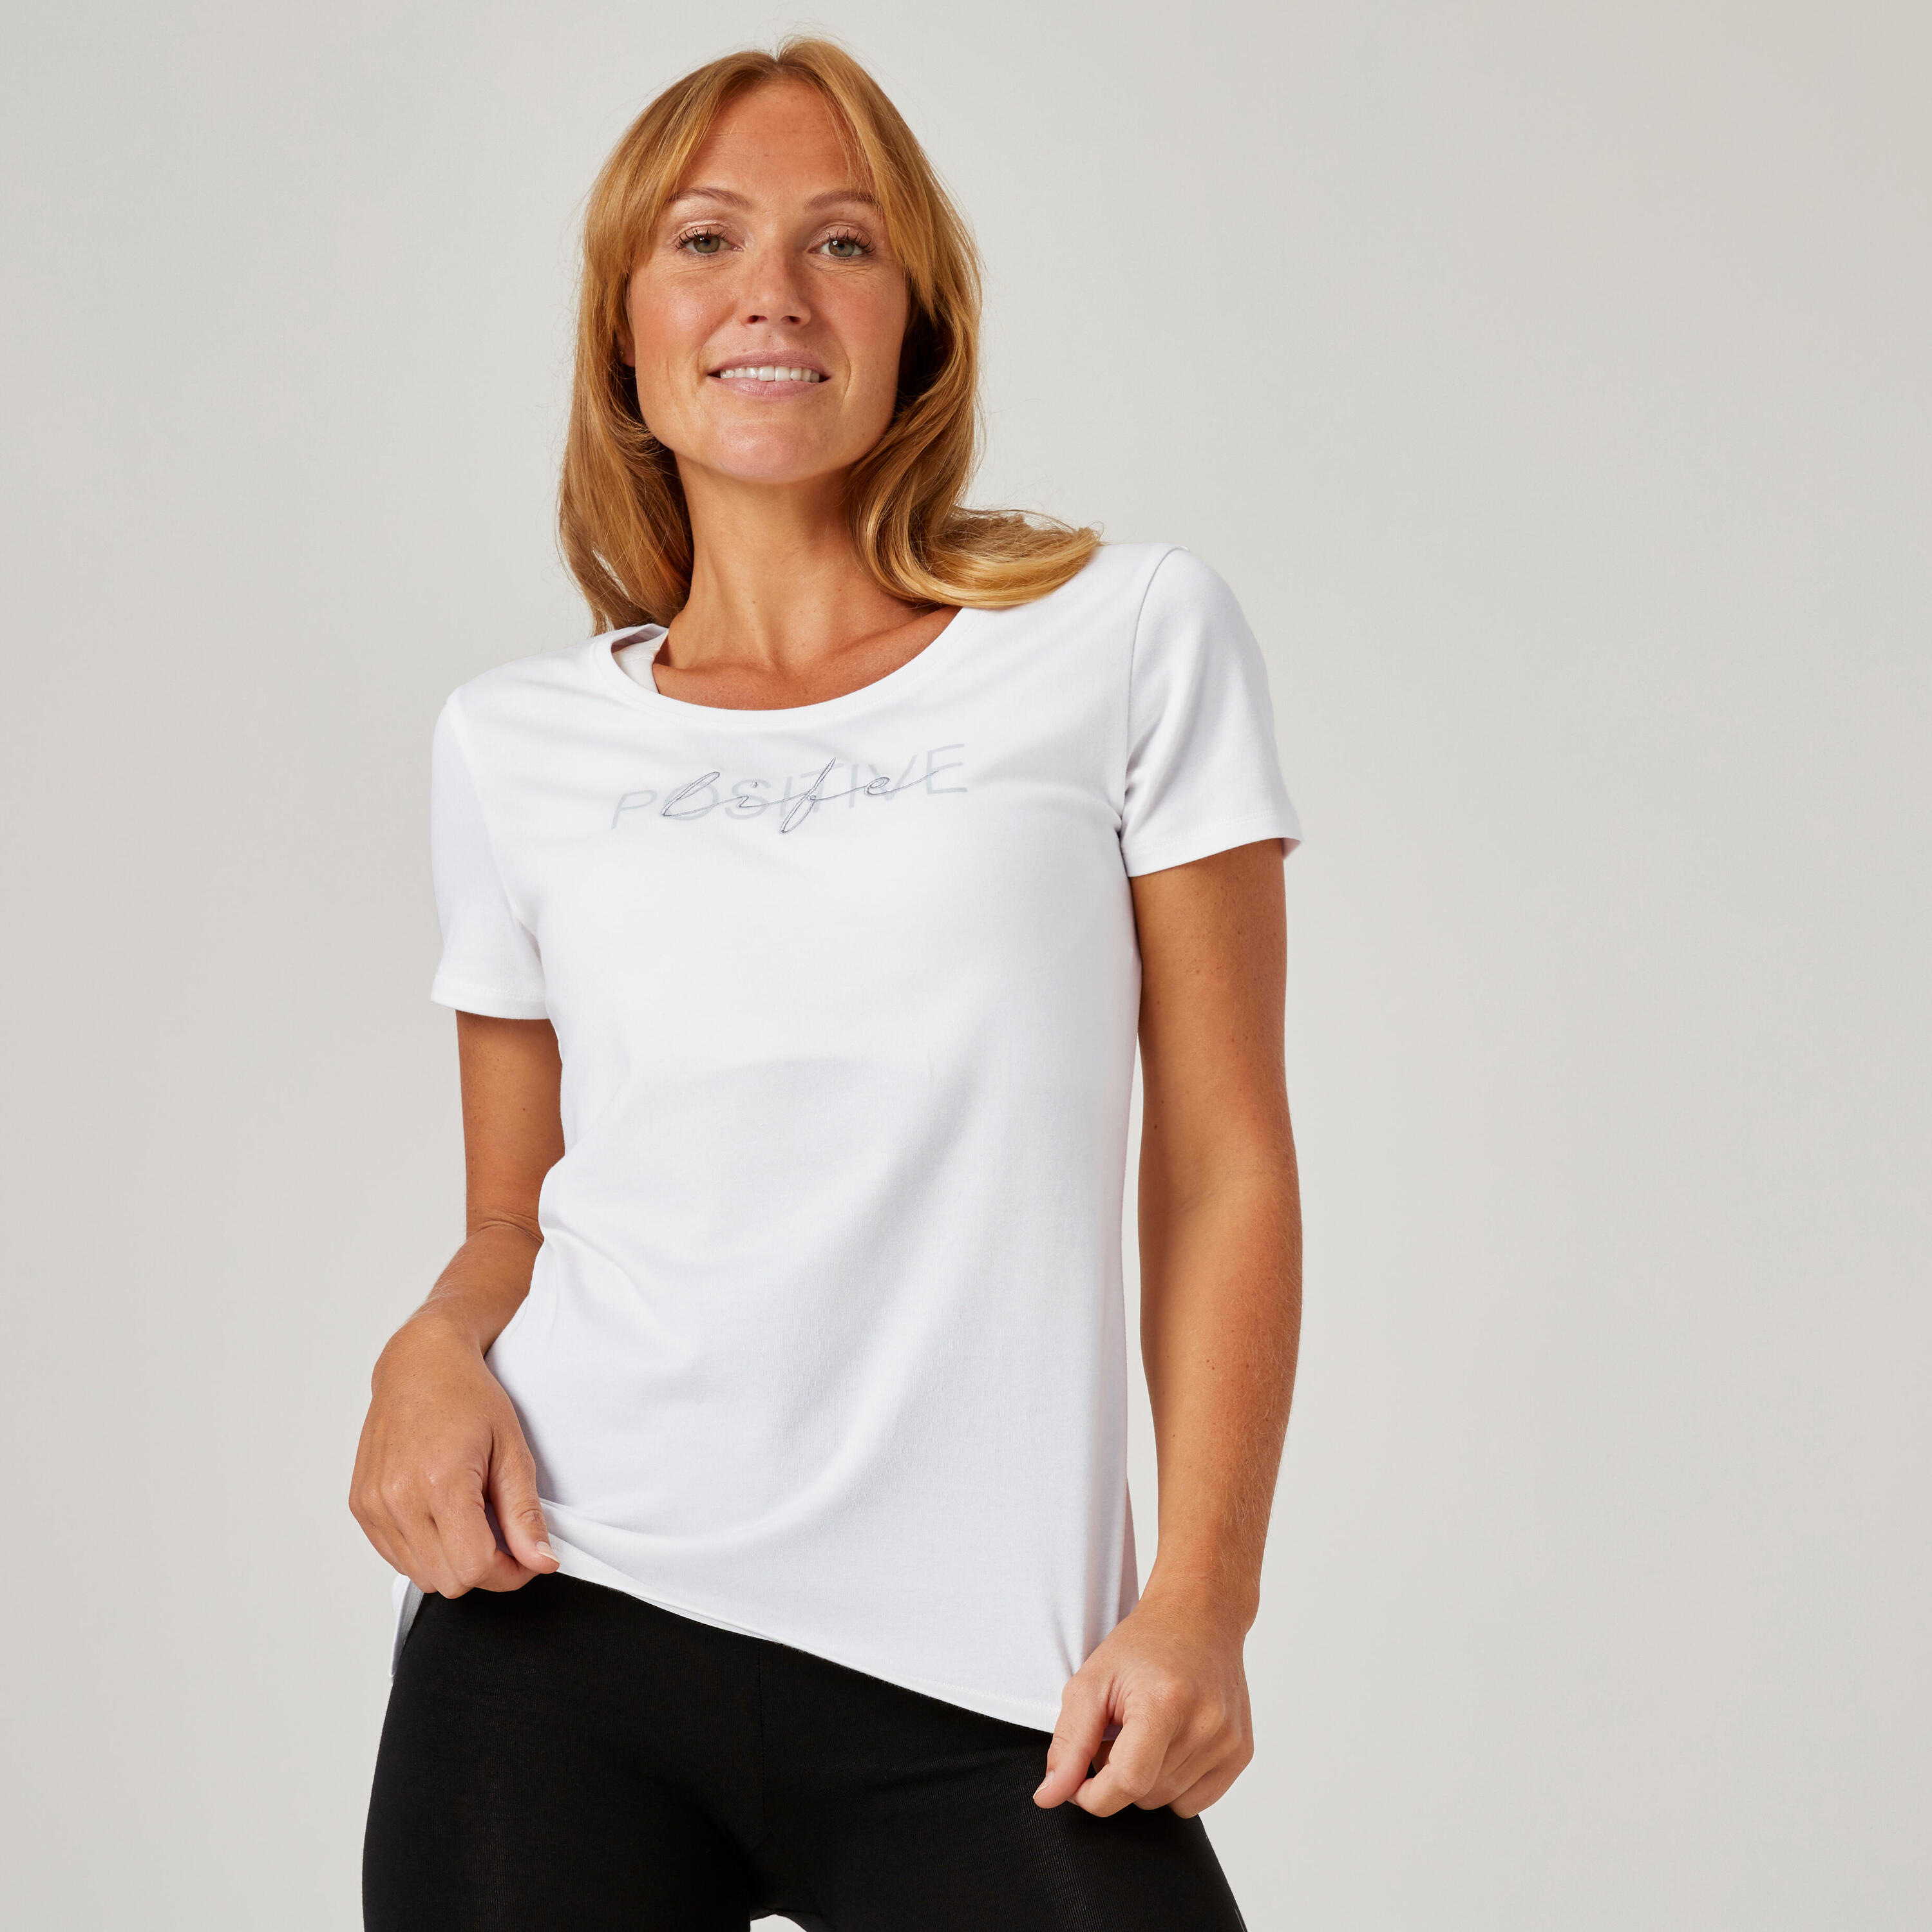 DOMYOS Women's Short-Sleeved Crew Neck Cotton Fitness T-Shirt 500 - Glacier White